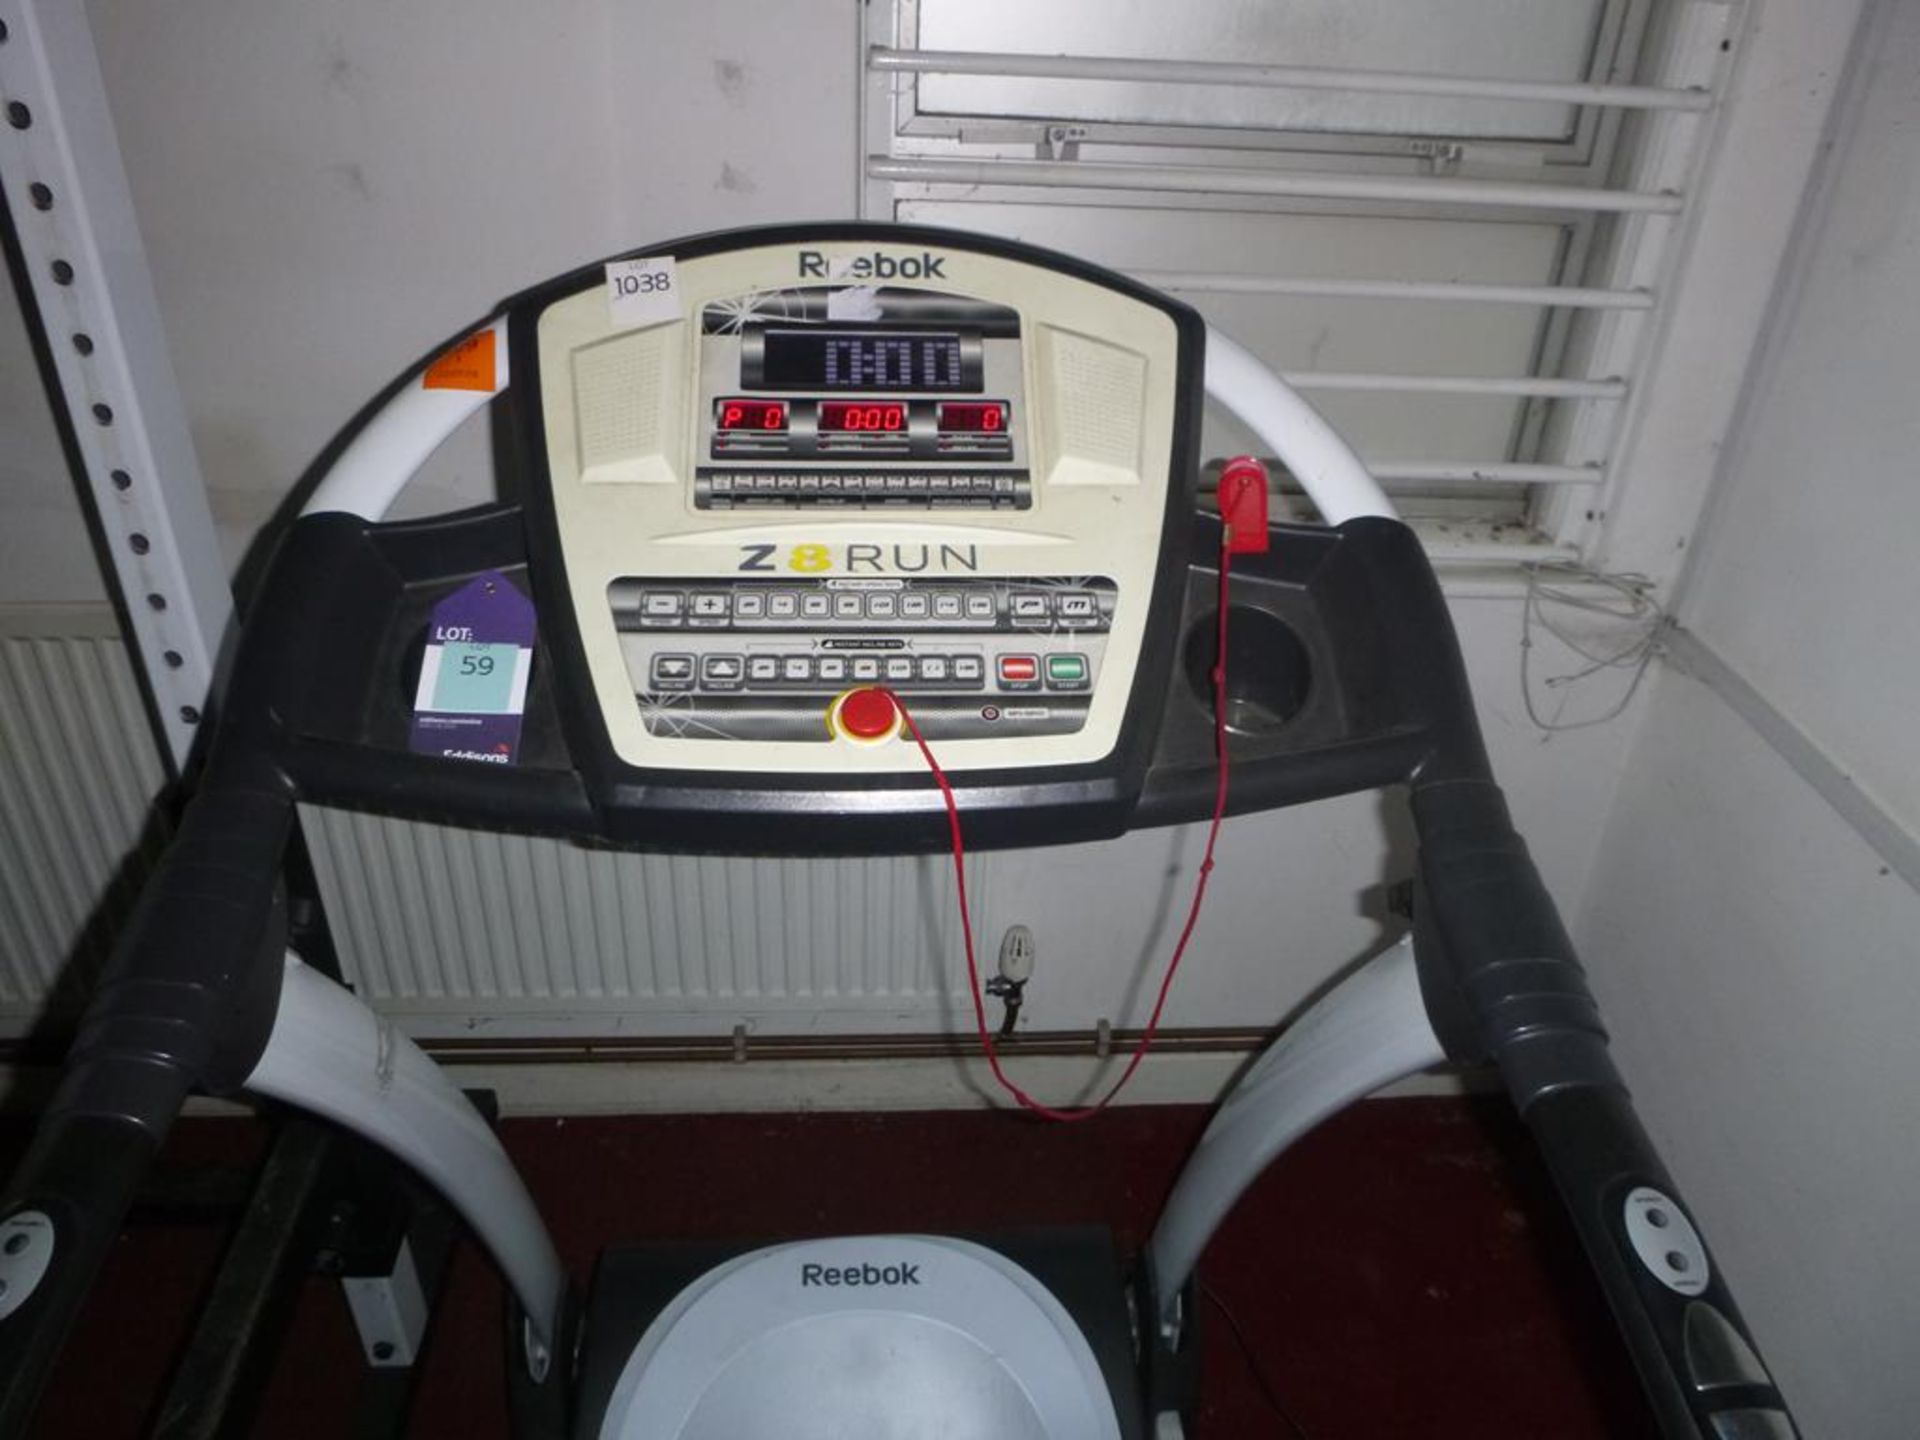 Reebok Z8 Run Folding Treadmill (spares or repairs) - Image 3 of 3